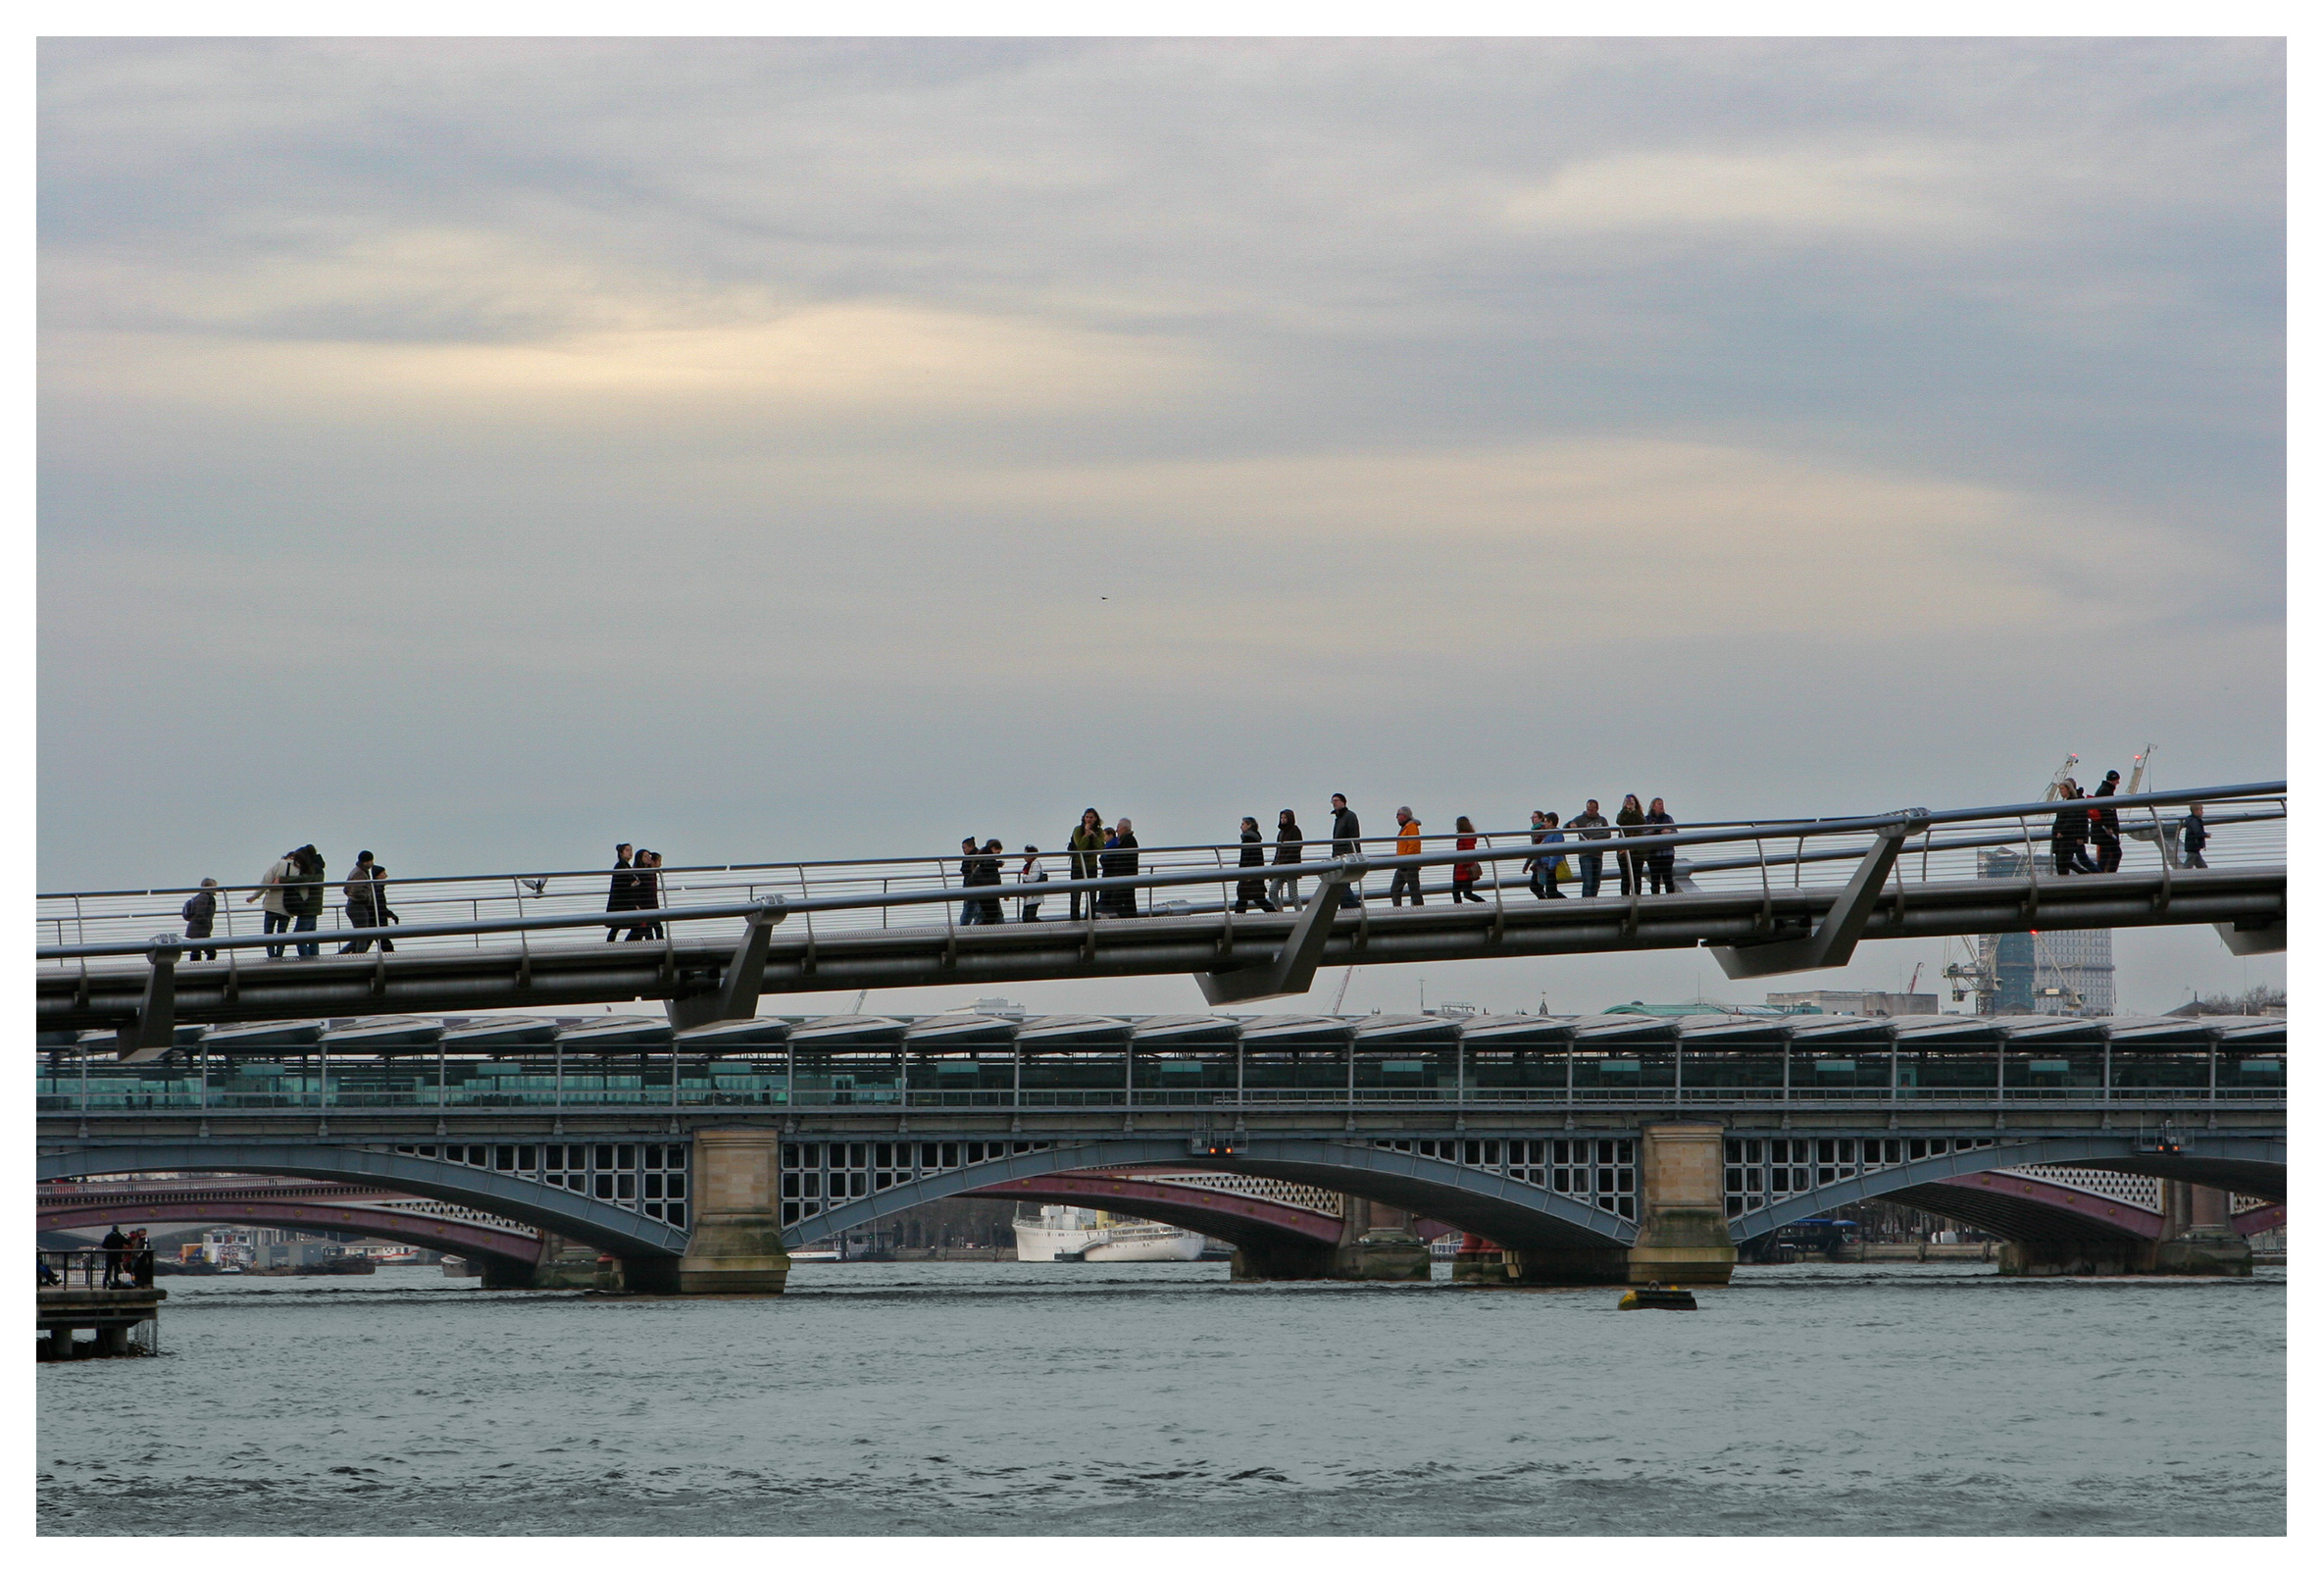 People on millenium bridge over the river Thames, London, England